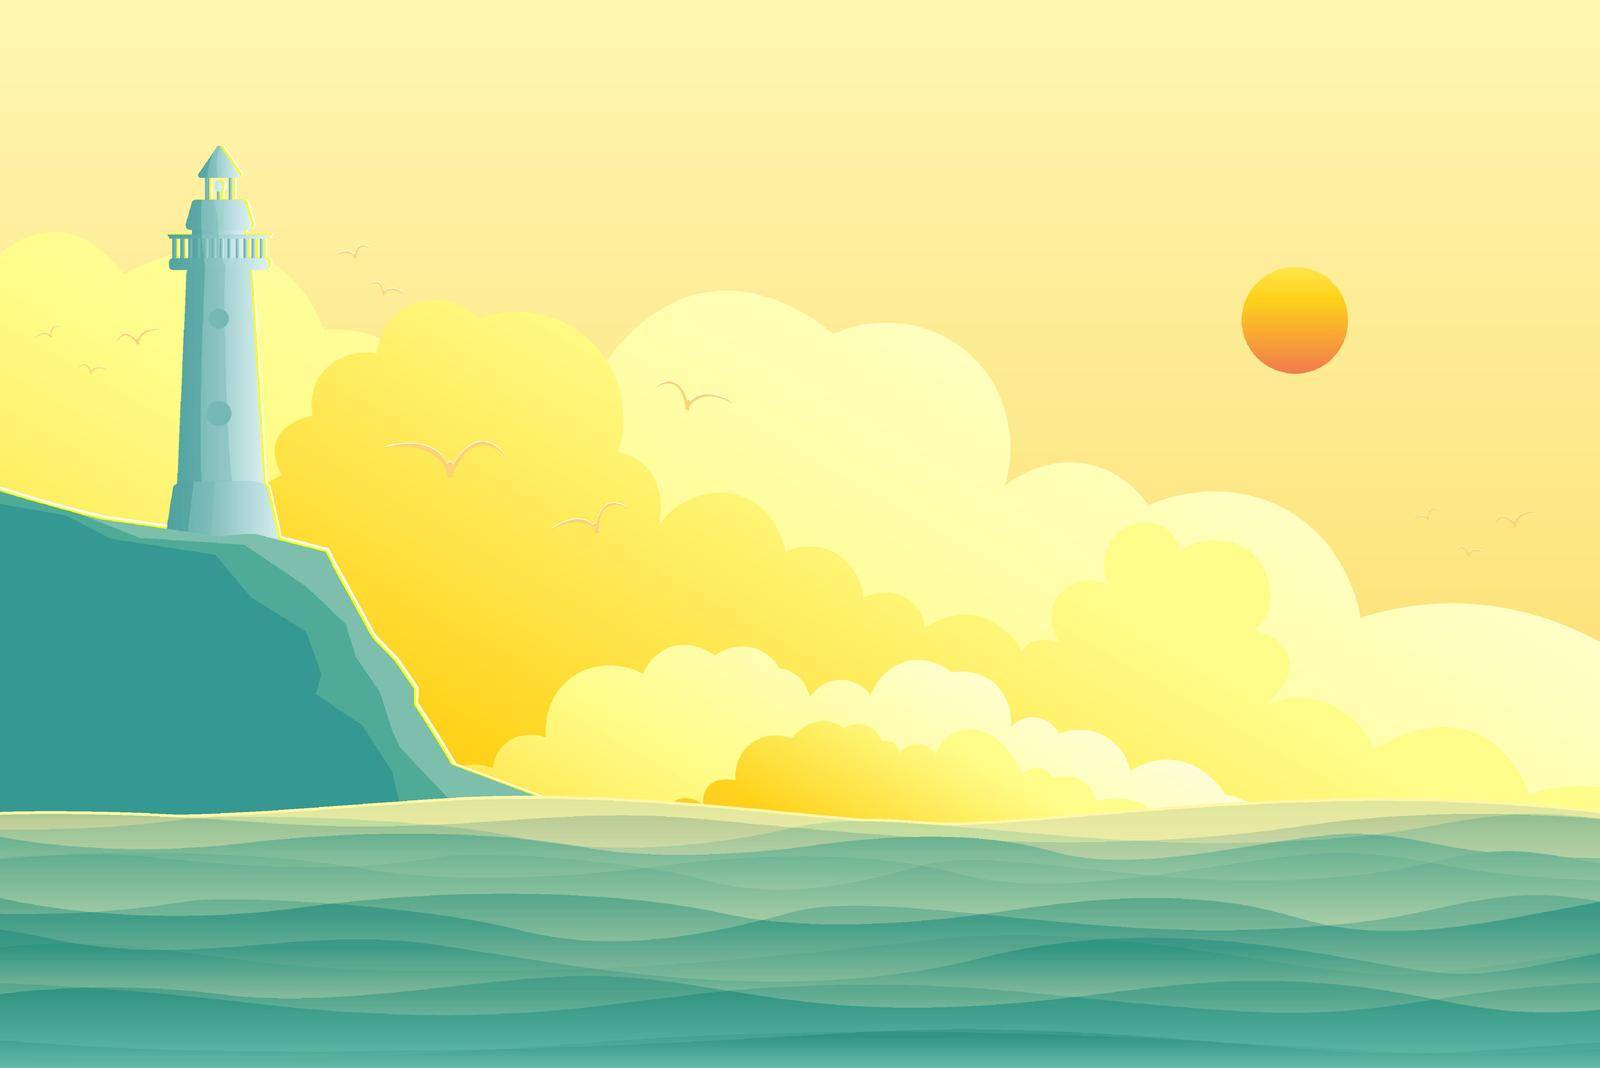 Seascape vector illustration. Lighthouse by samarttiw